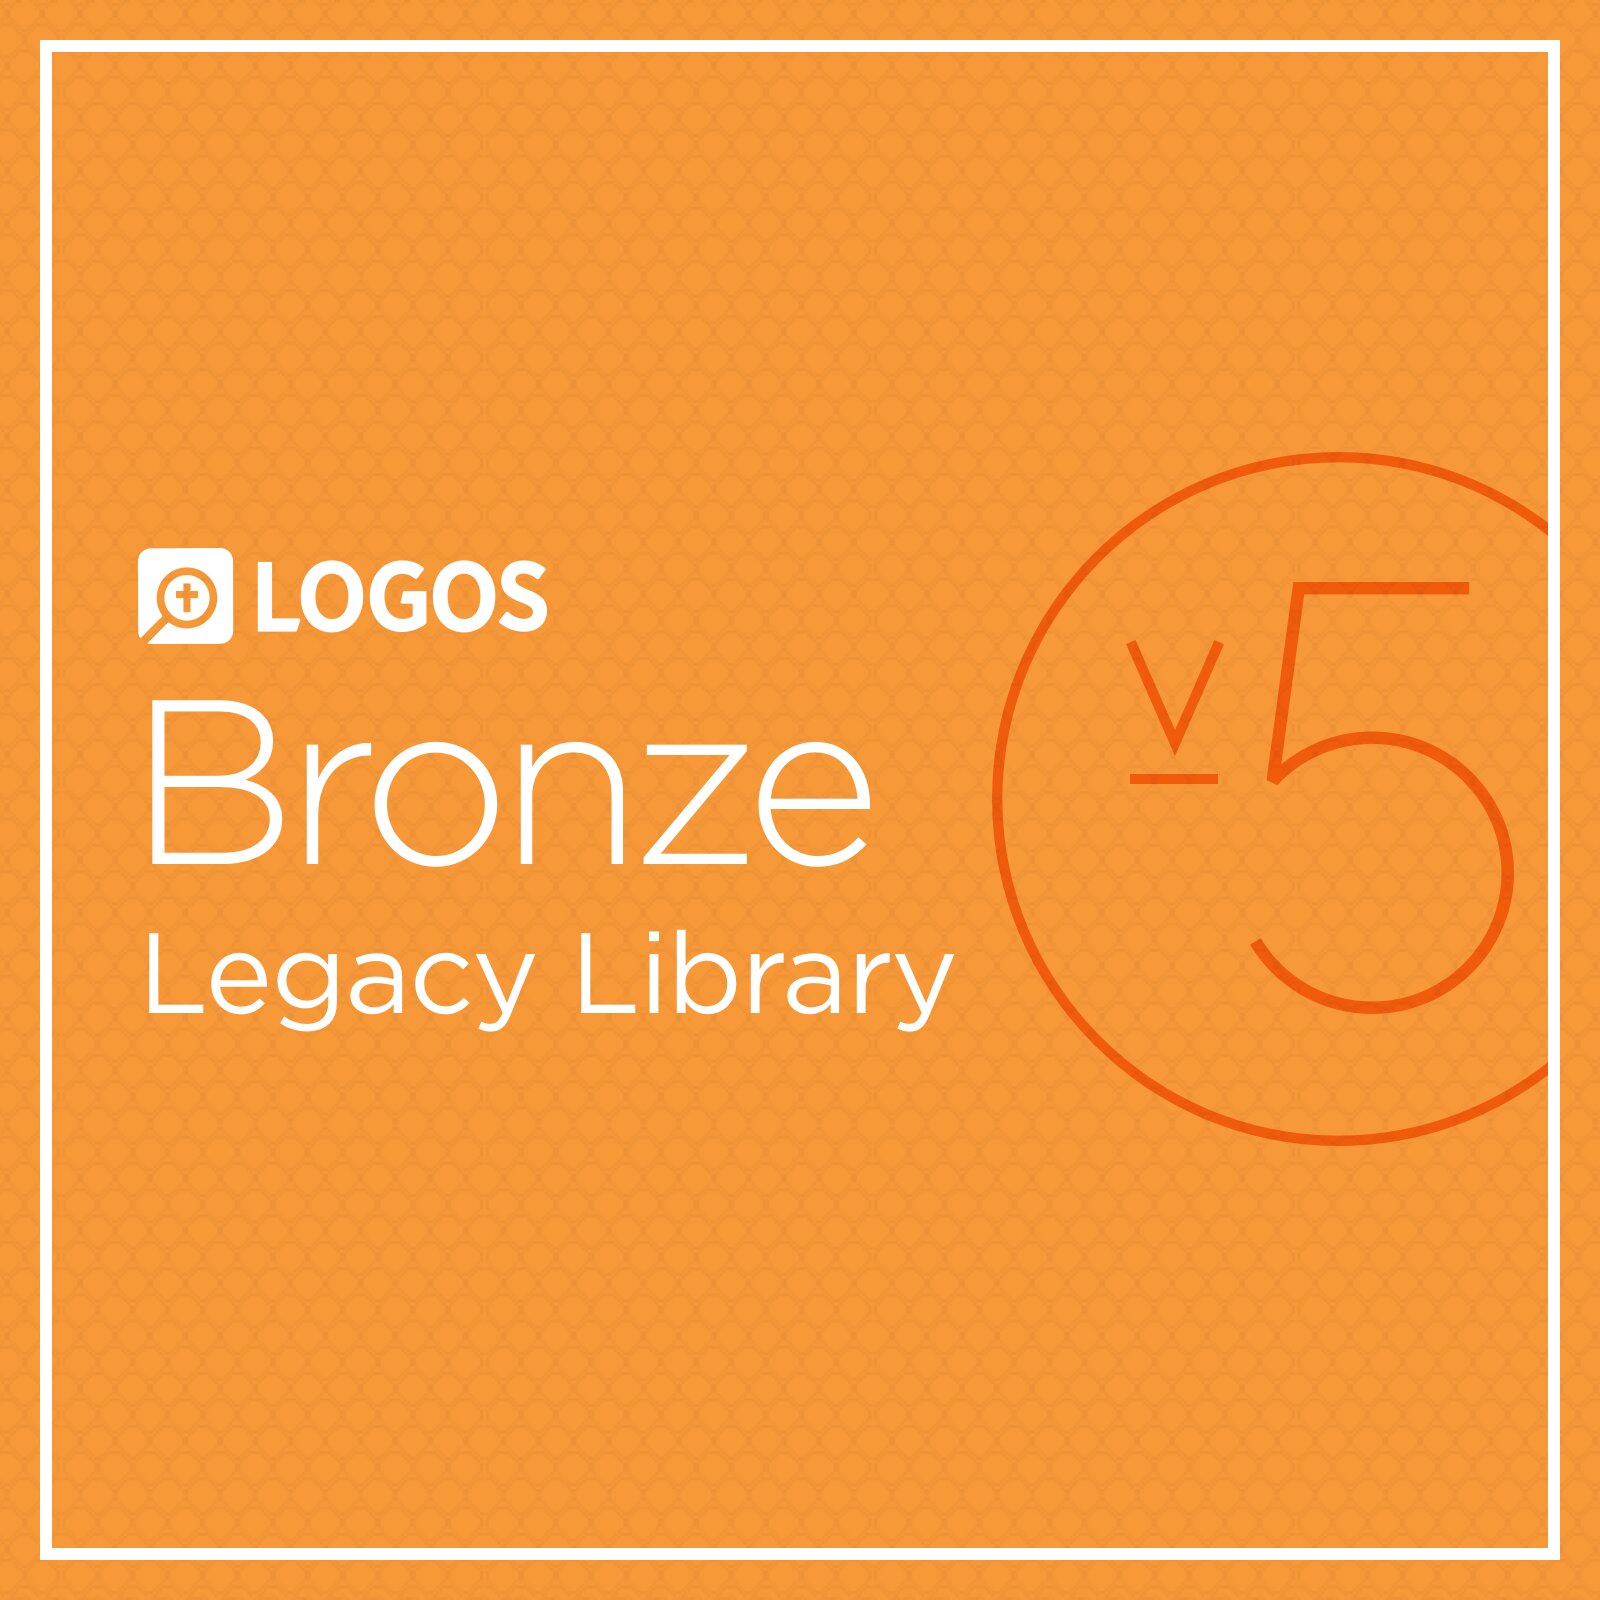 Logos 5 Bronze Legacy Library